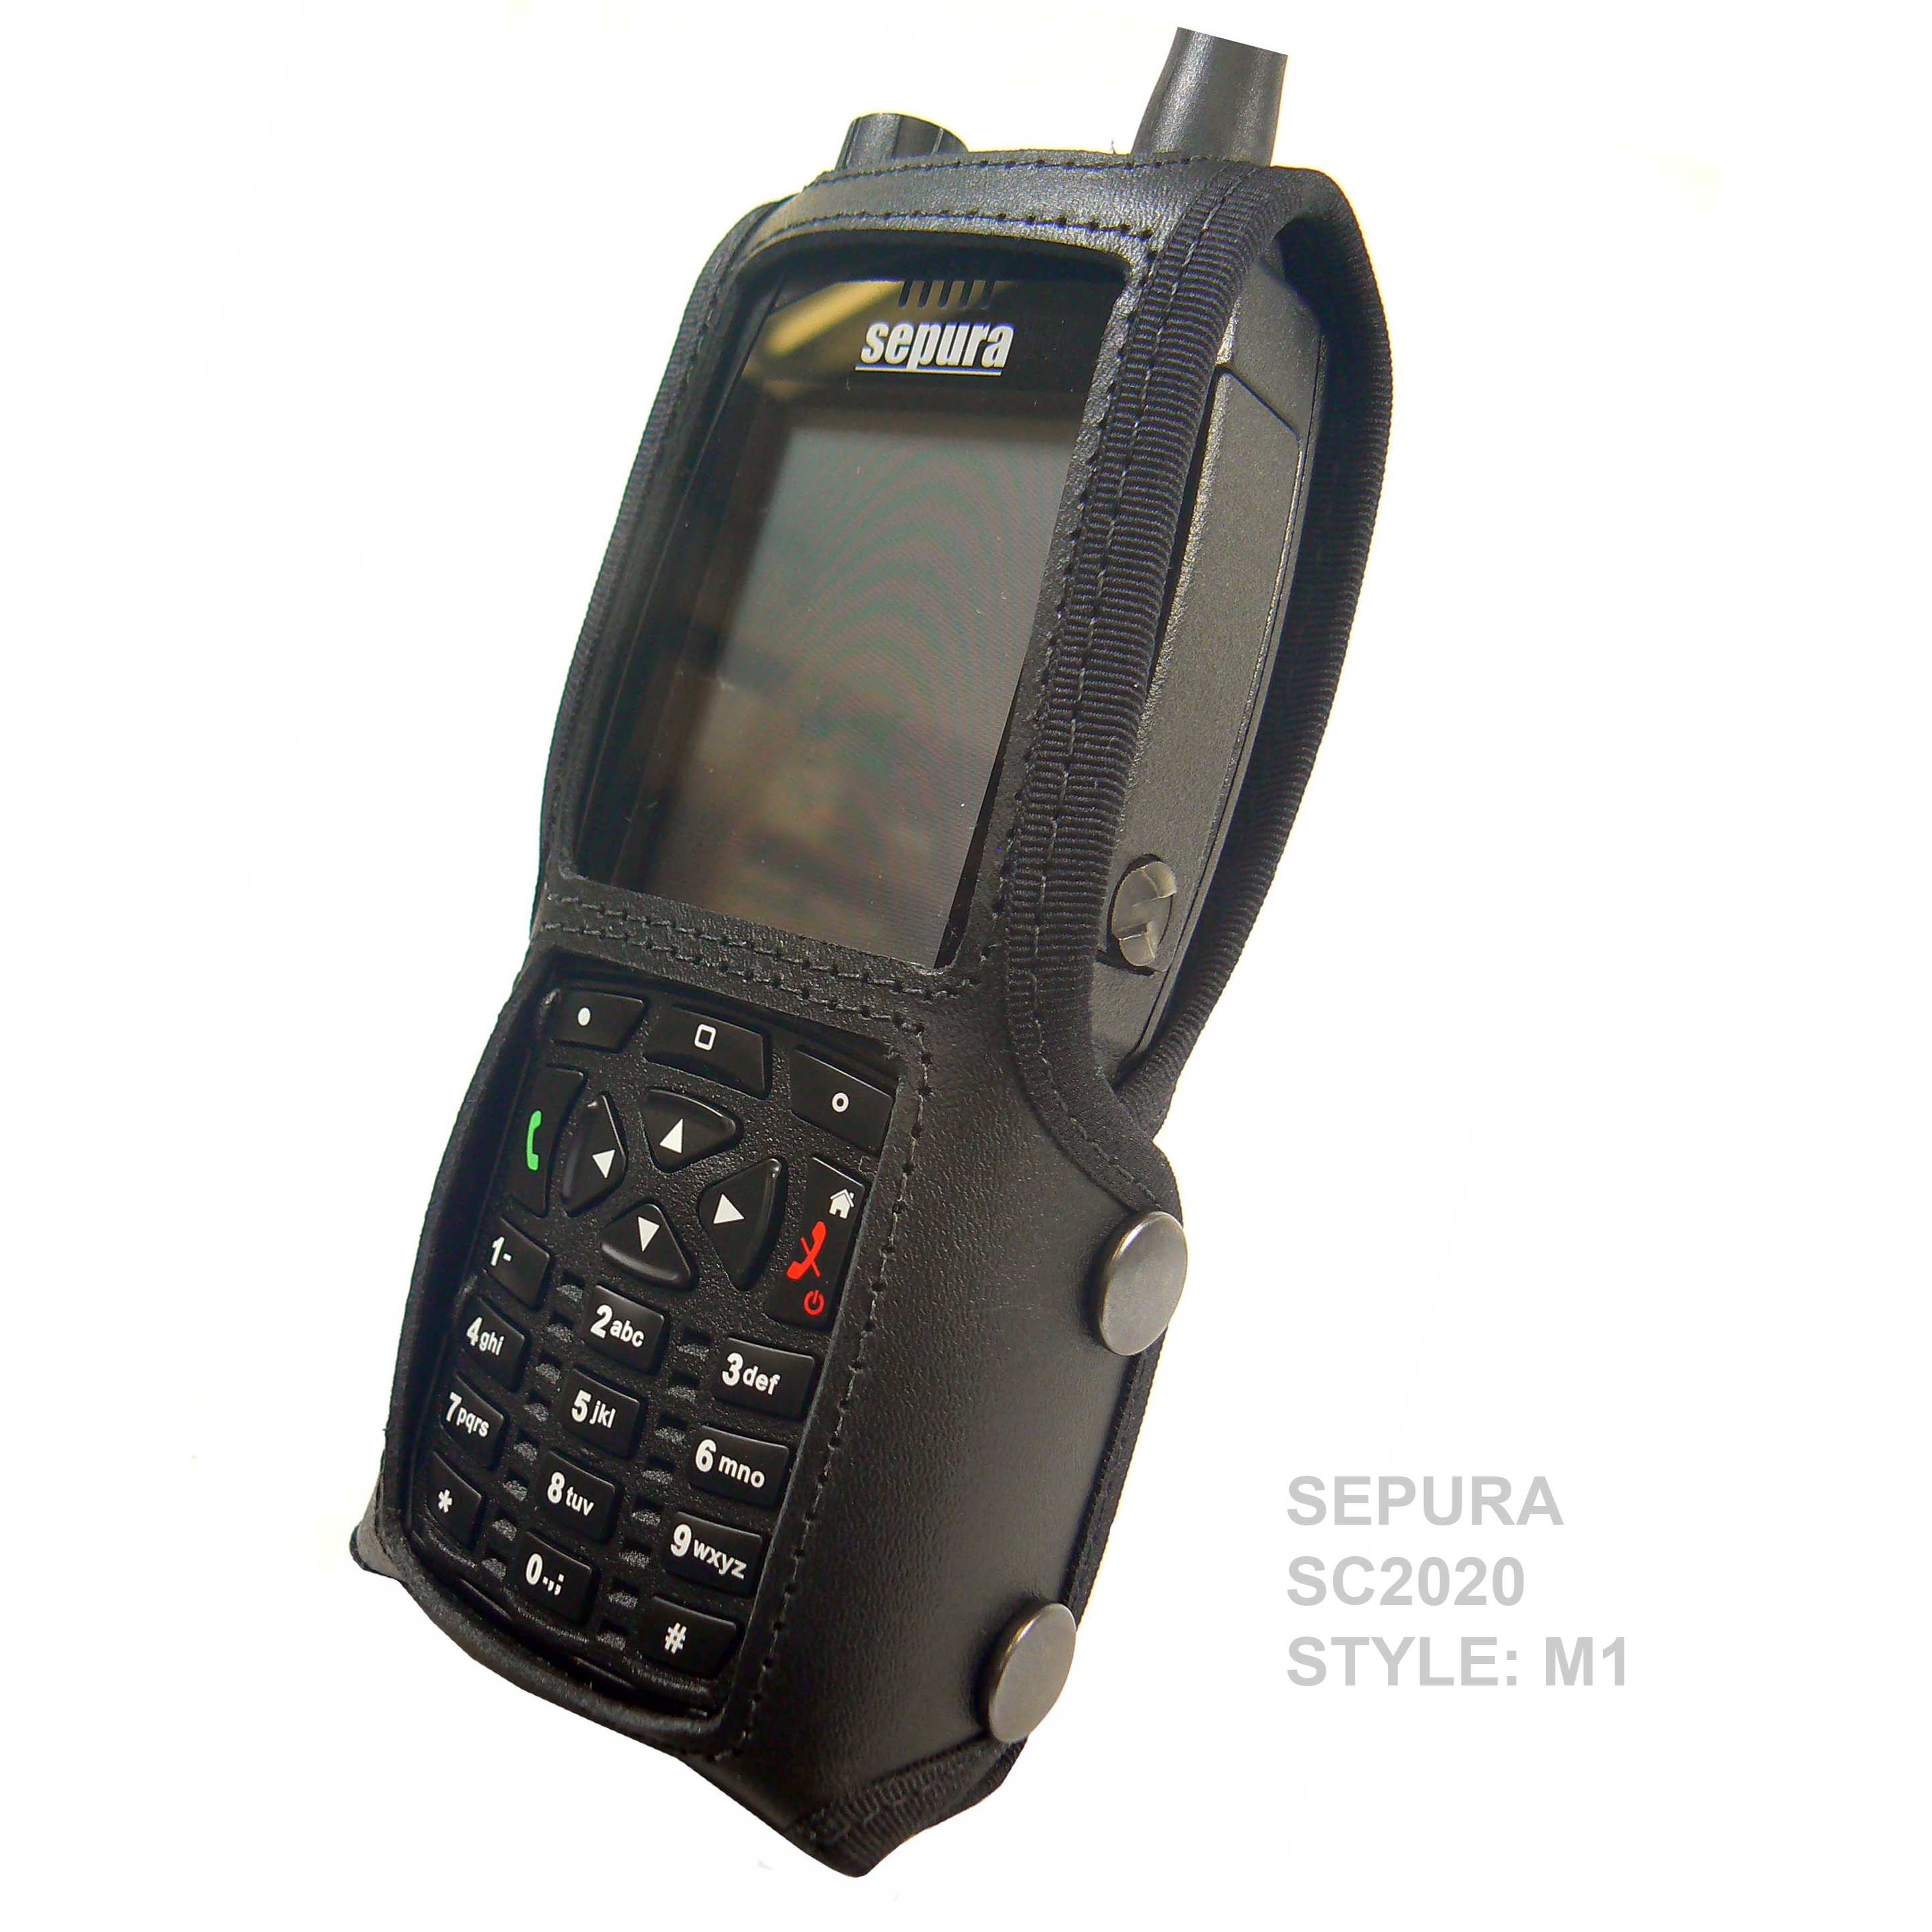 Tetra Sepura SC2020 leather radio case with Click-On